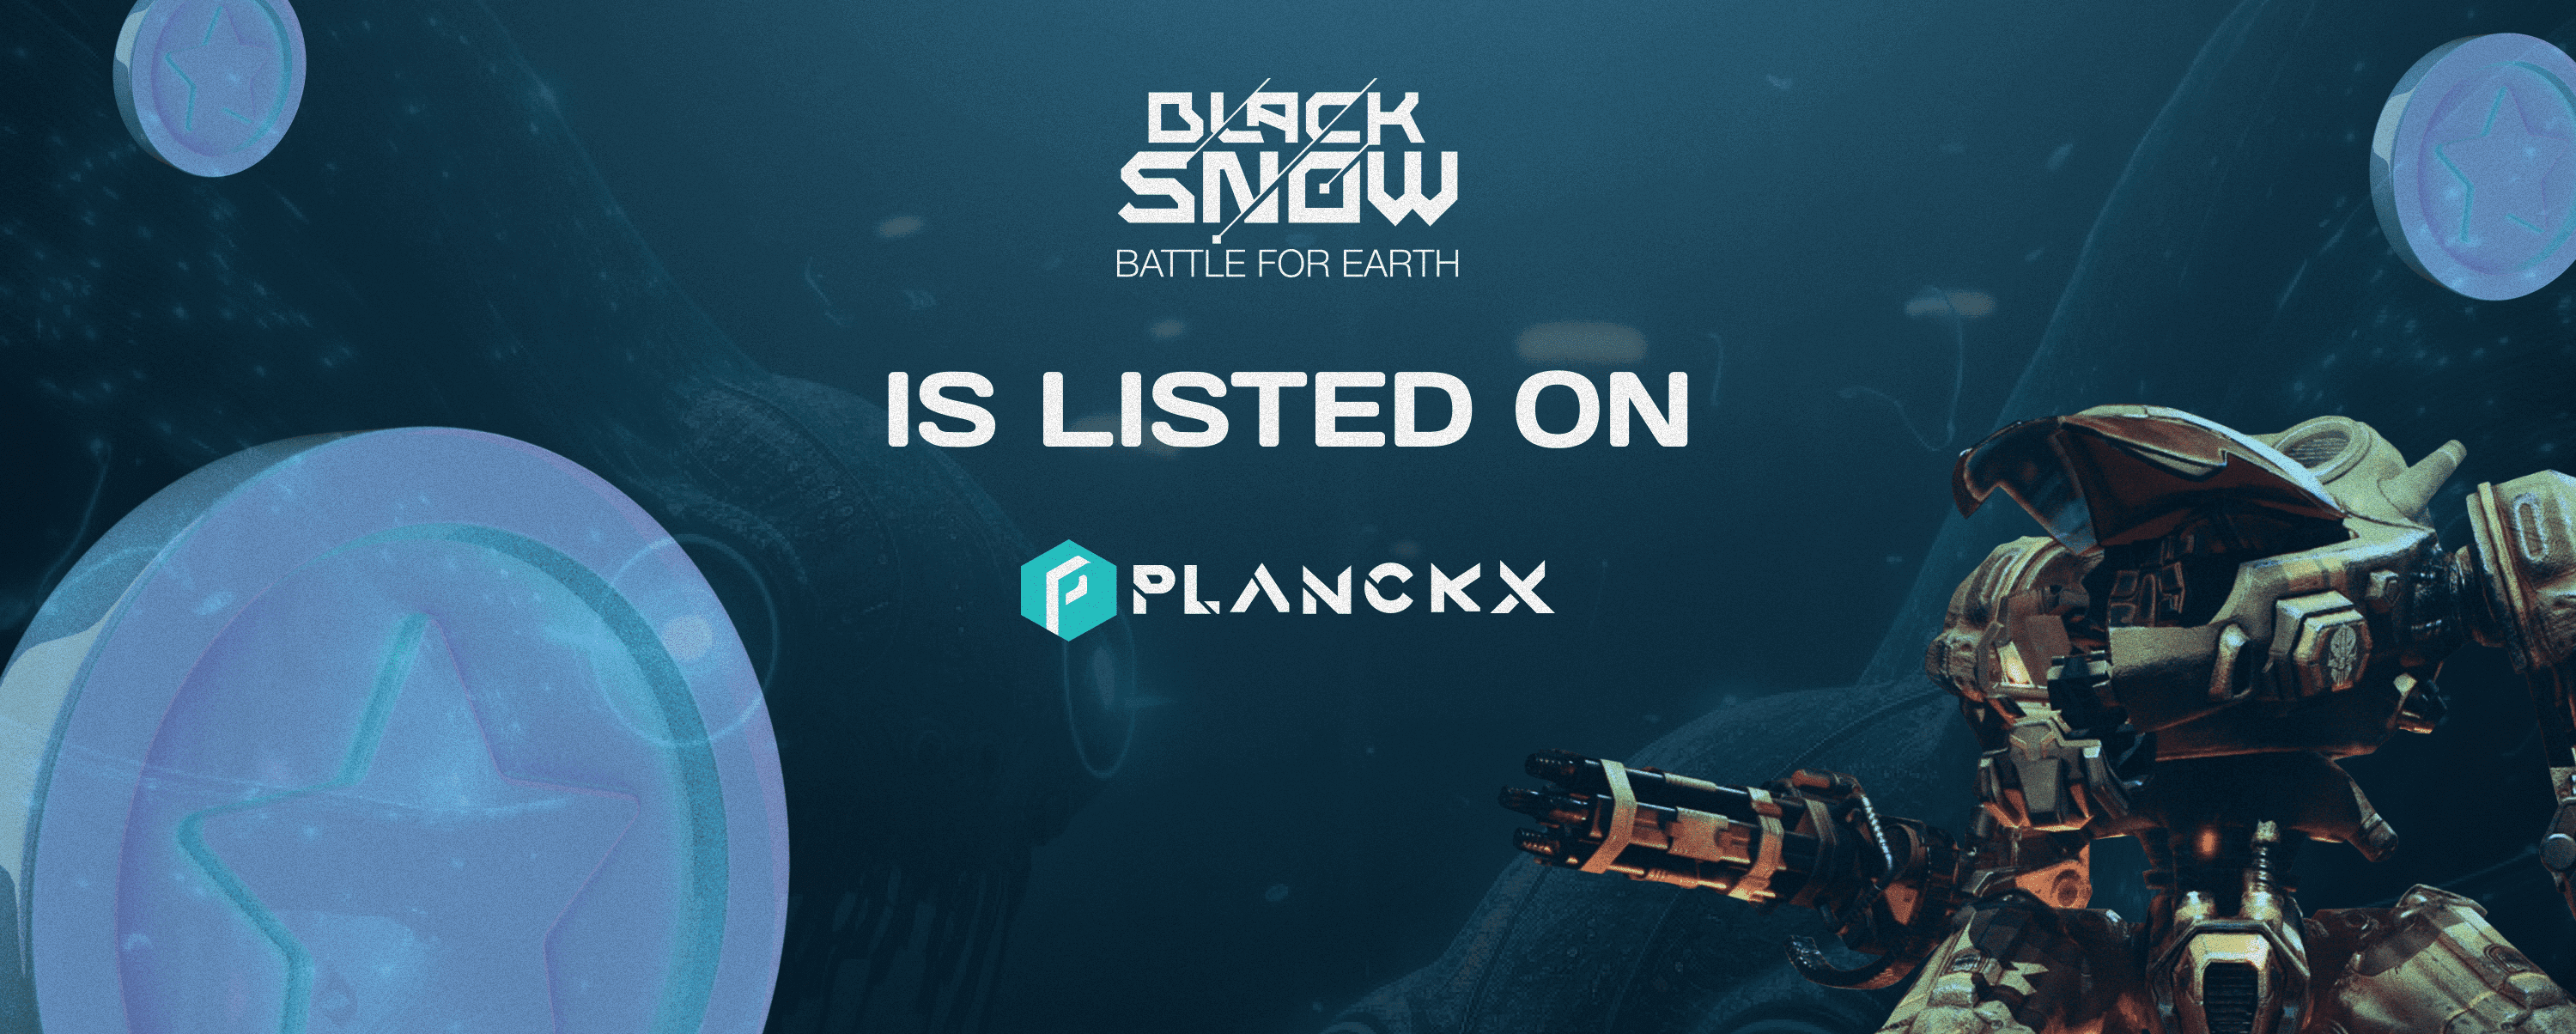 PlanckX + Black Snow: Battle for Earth